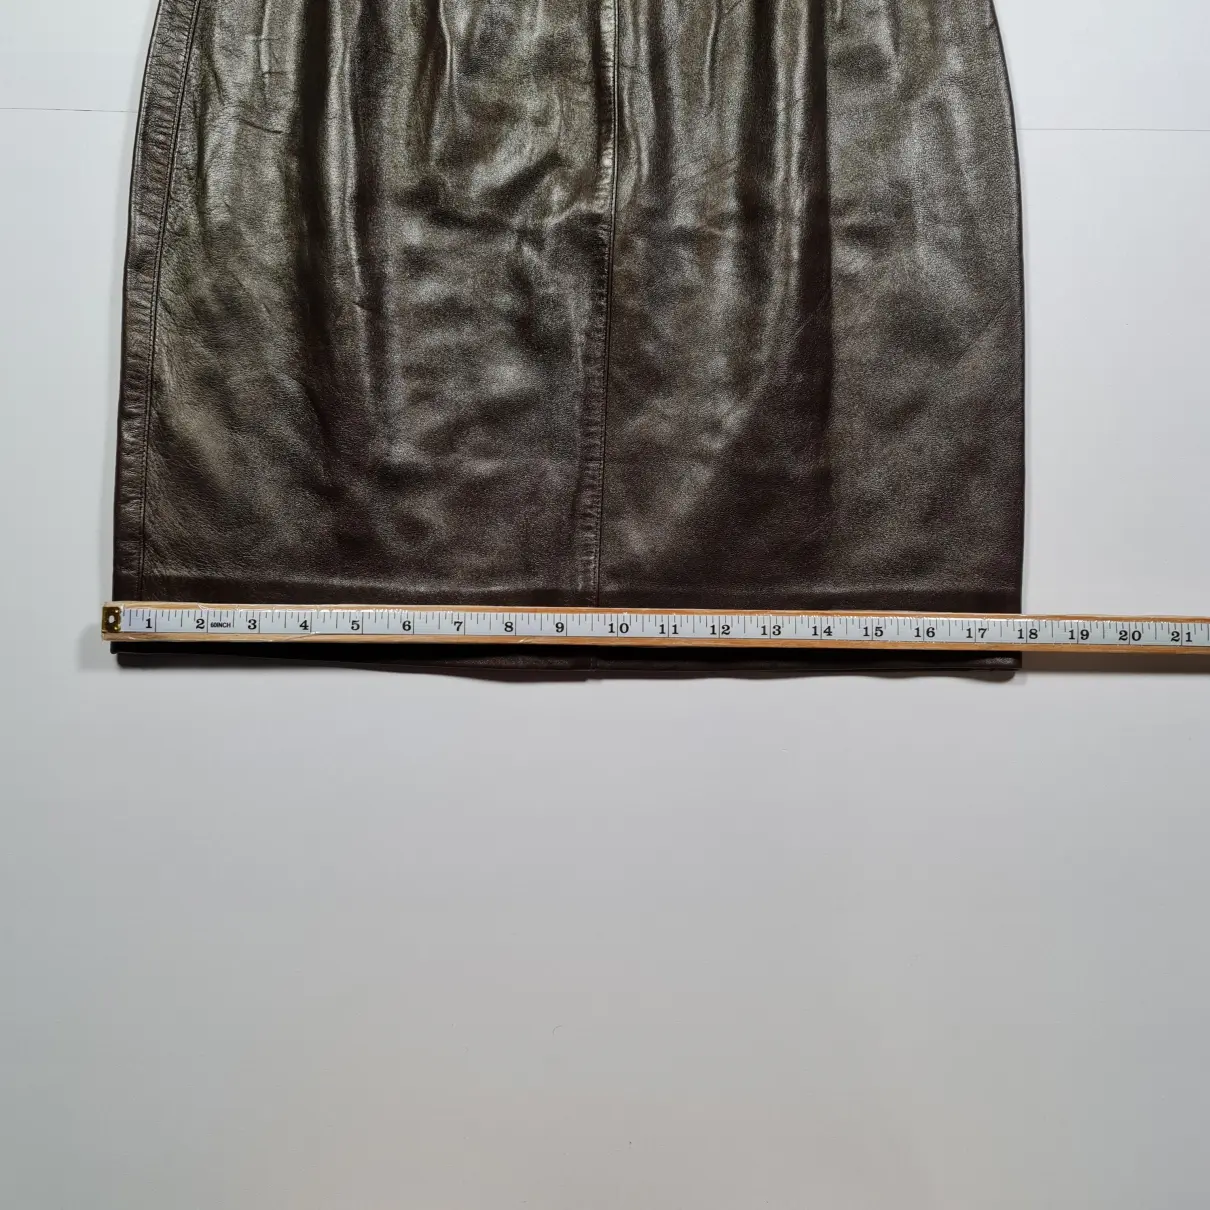 Leather mid-length skirt Dior